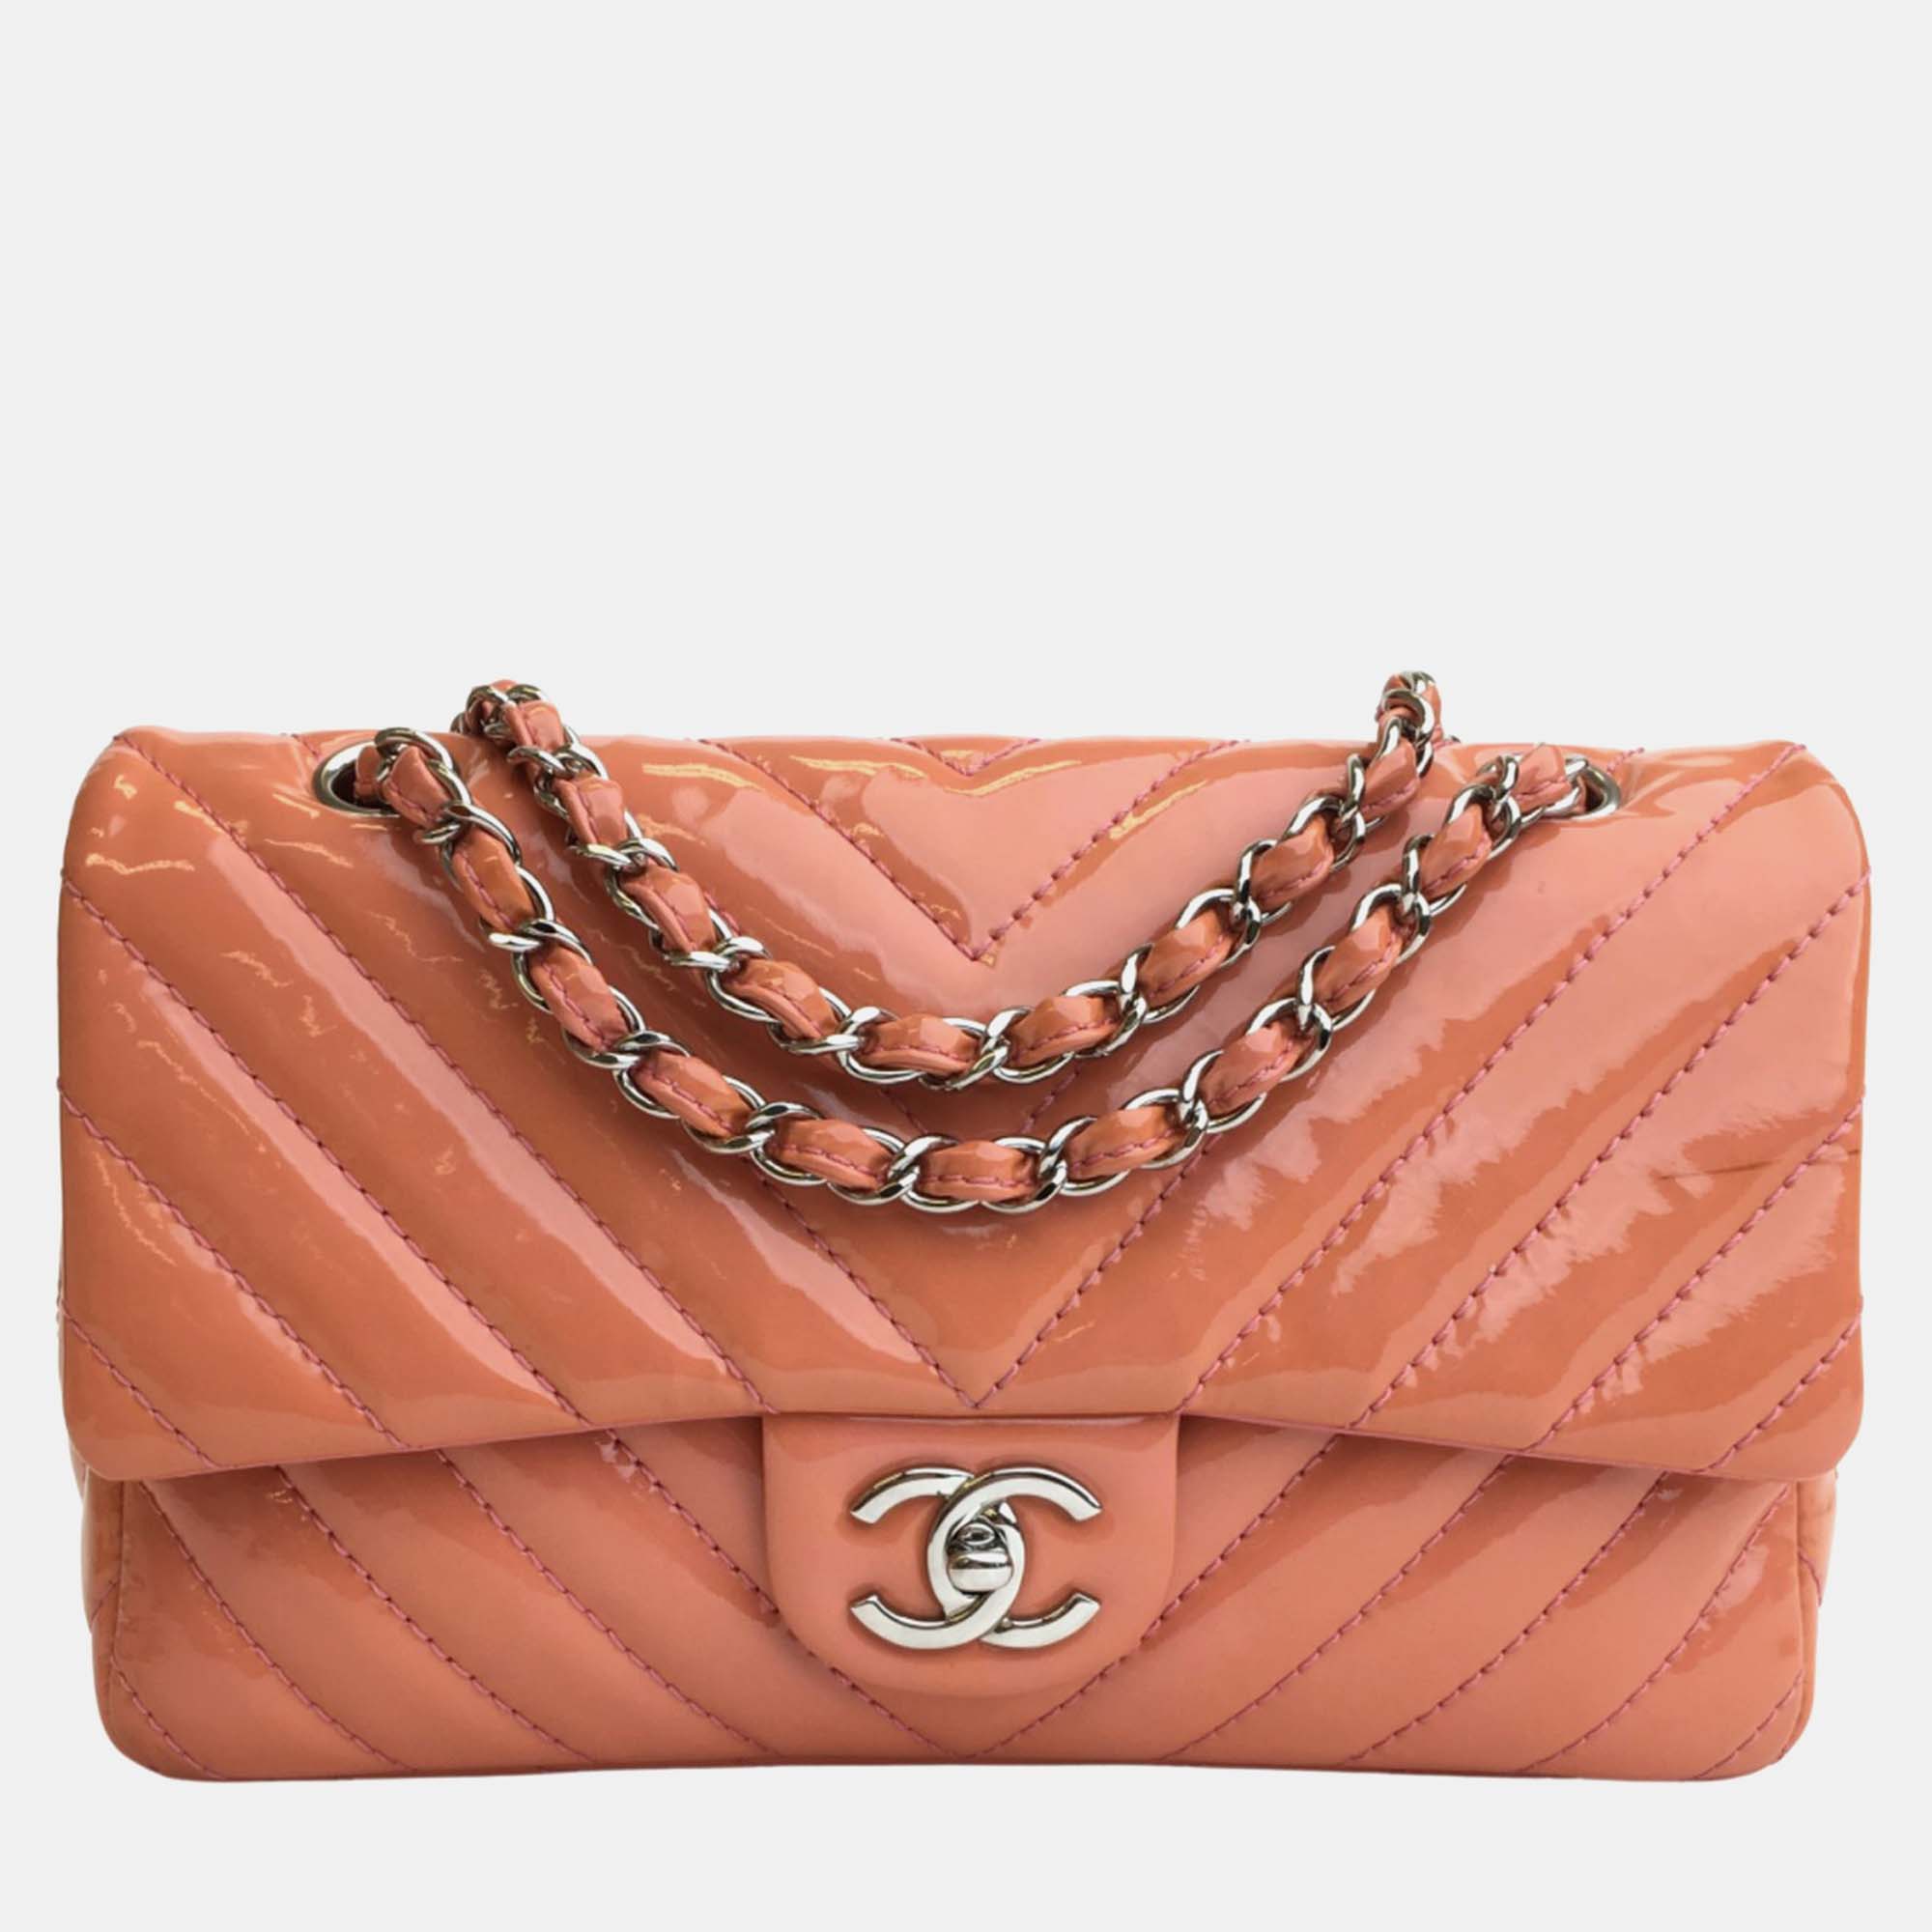 Chanel peach patent leather flap shoulder bag